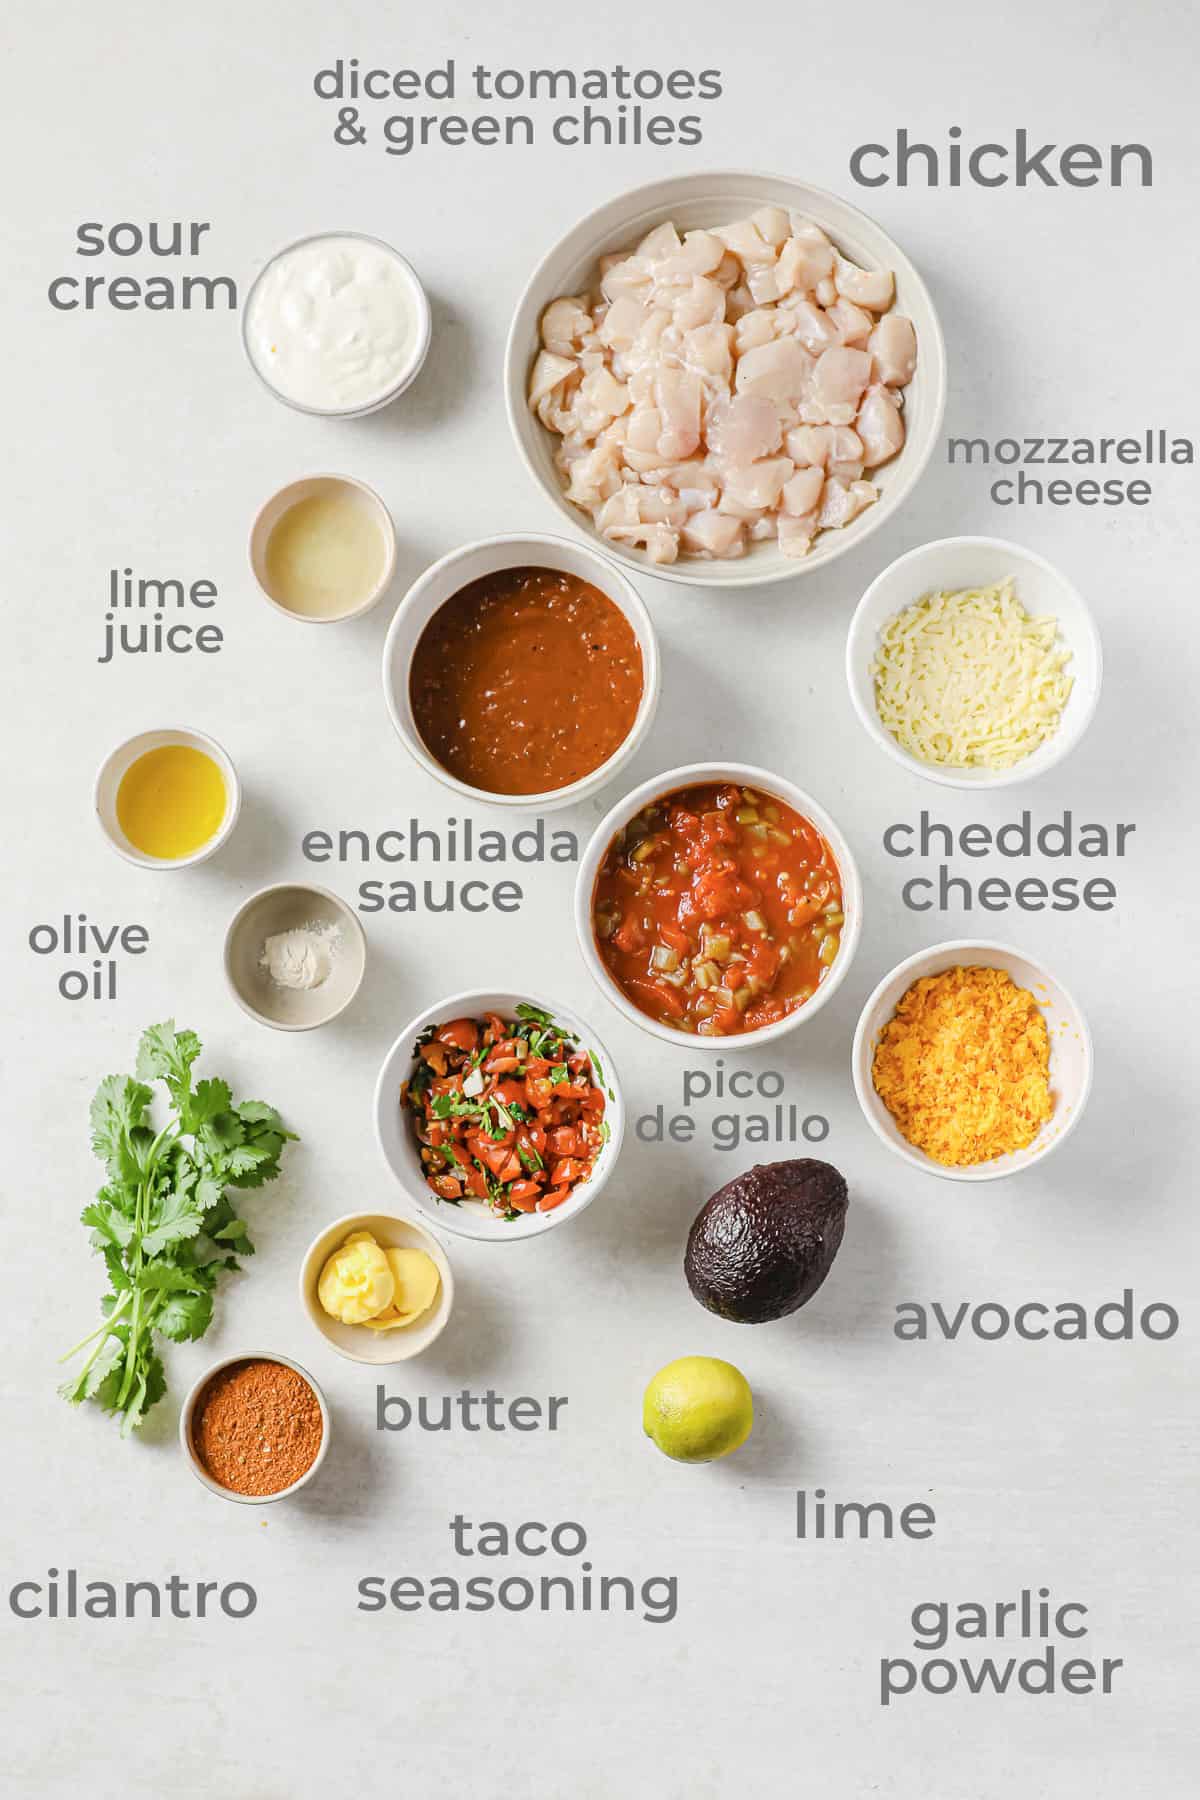 Ingredients all laid out to make keto chicken enchilada bowls - chicken, enchilada sauce, avocado, cilantro, diced tomatoes, pic de Gallo, limes, sour cream